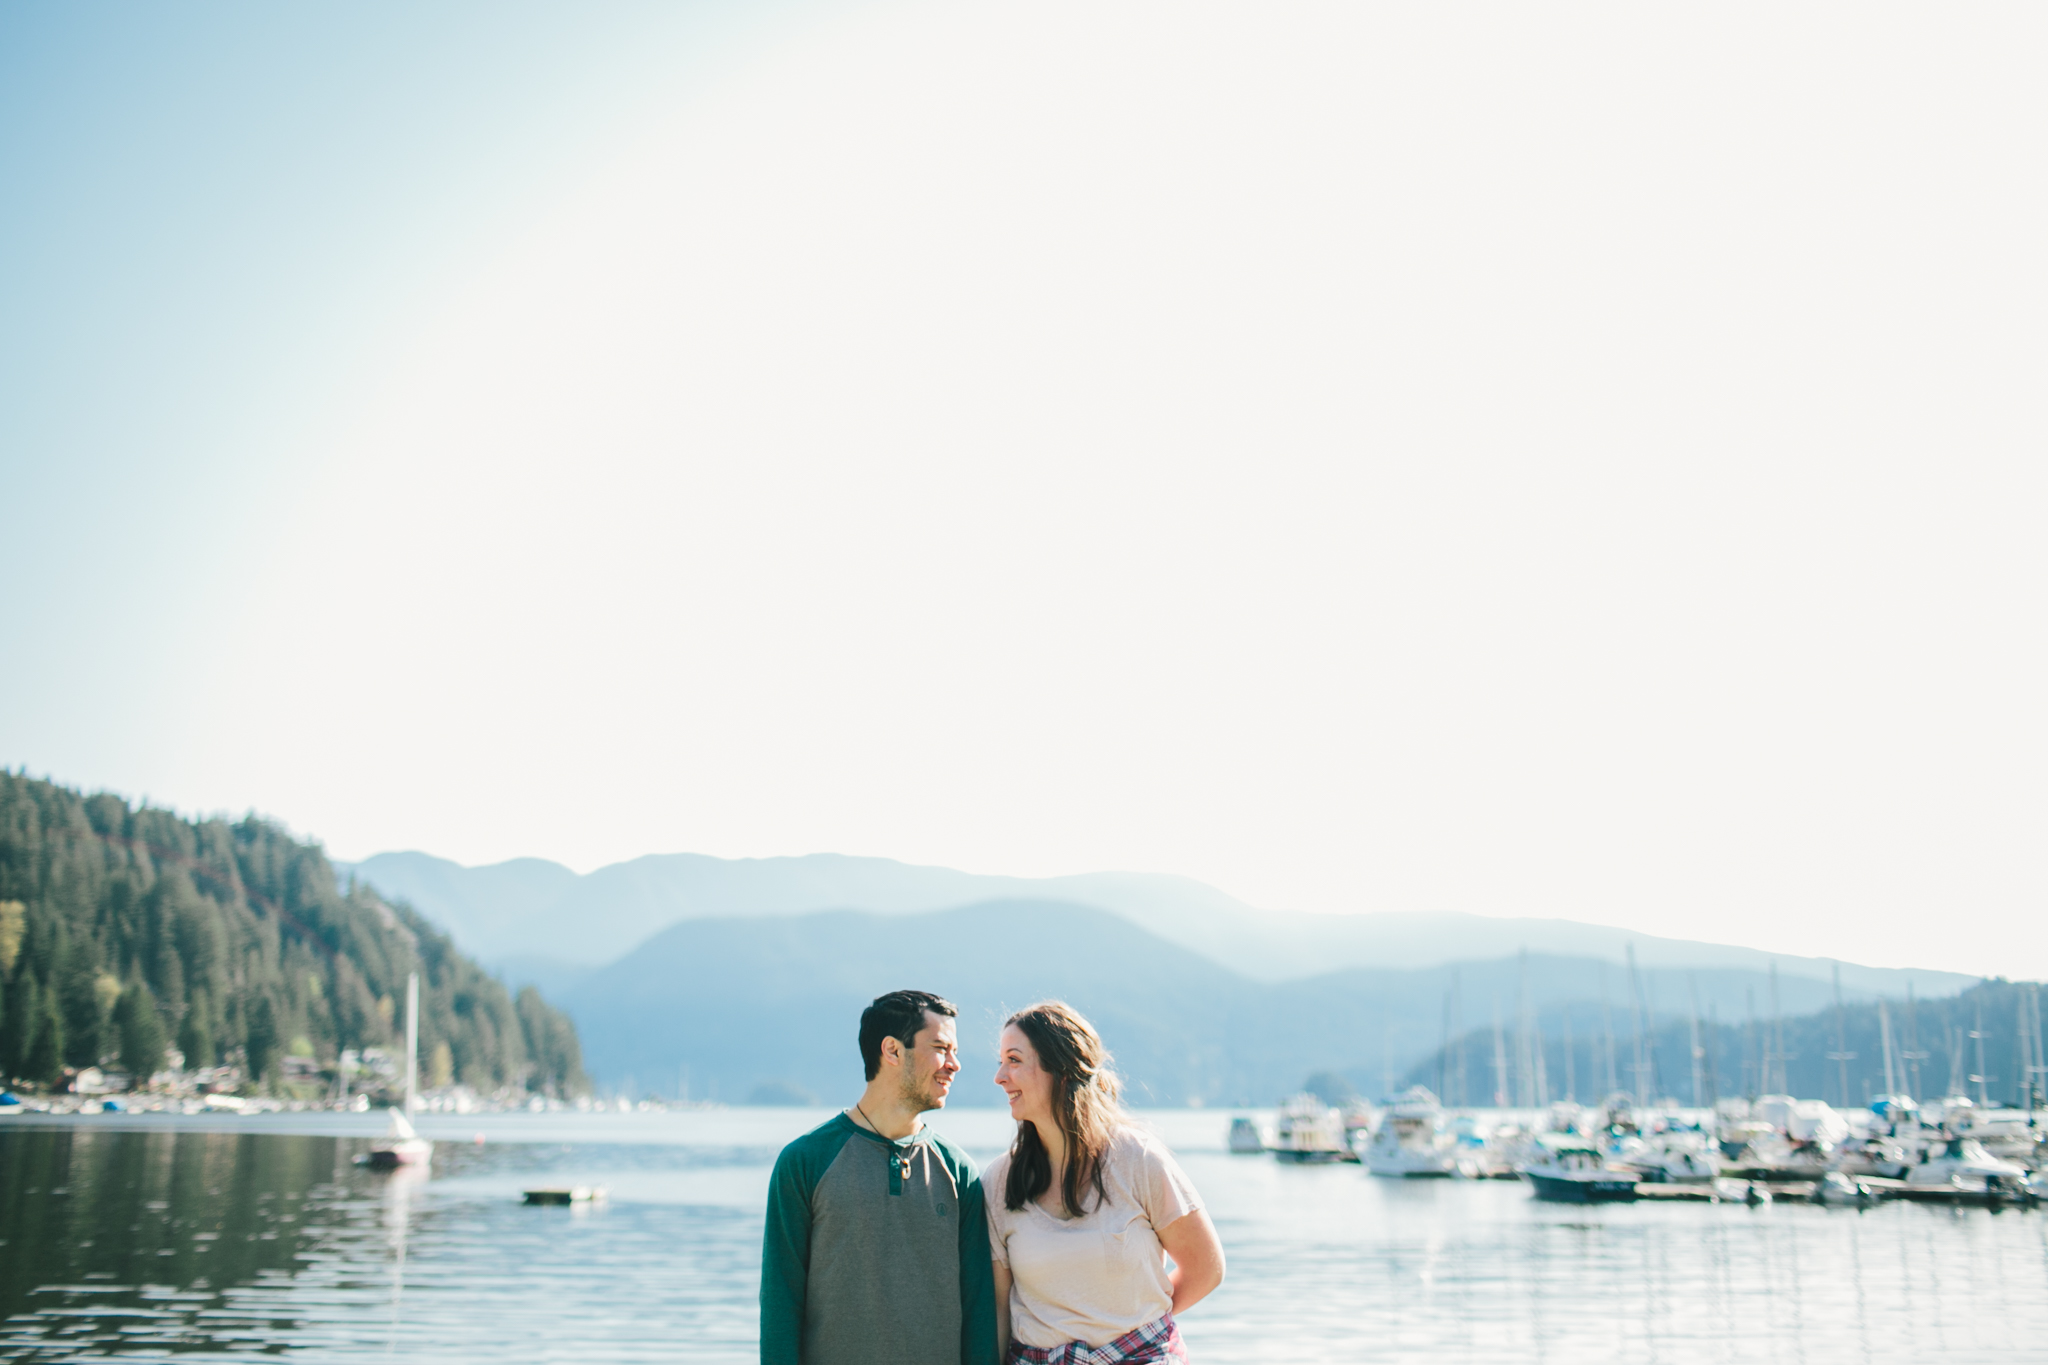  A North Vancouver Deep cove and Quarry rock engagement session.  Vancouver&nbsp;wedding, lifestyle and portrait&nbsp;photographer. Lesley Laine 